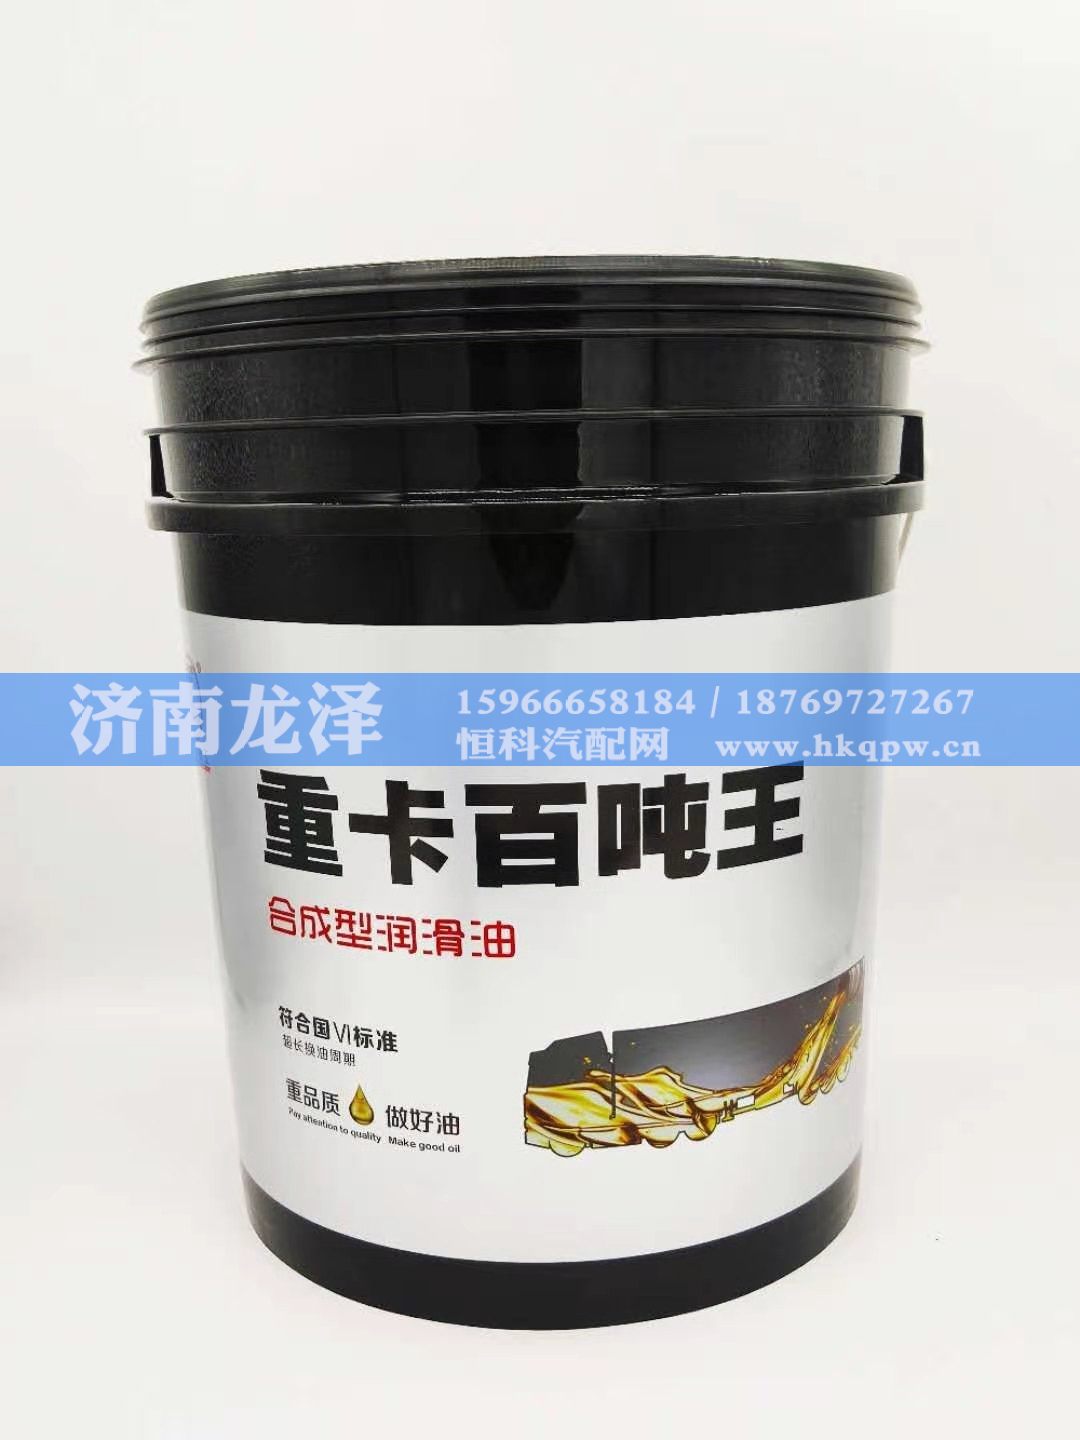 GL-5合成型润滑油/GL-5